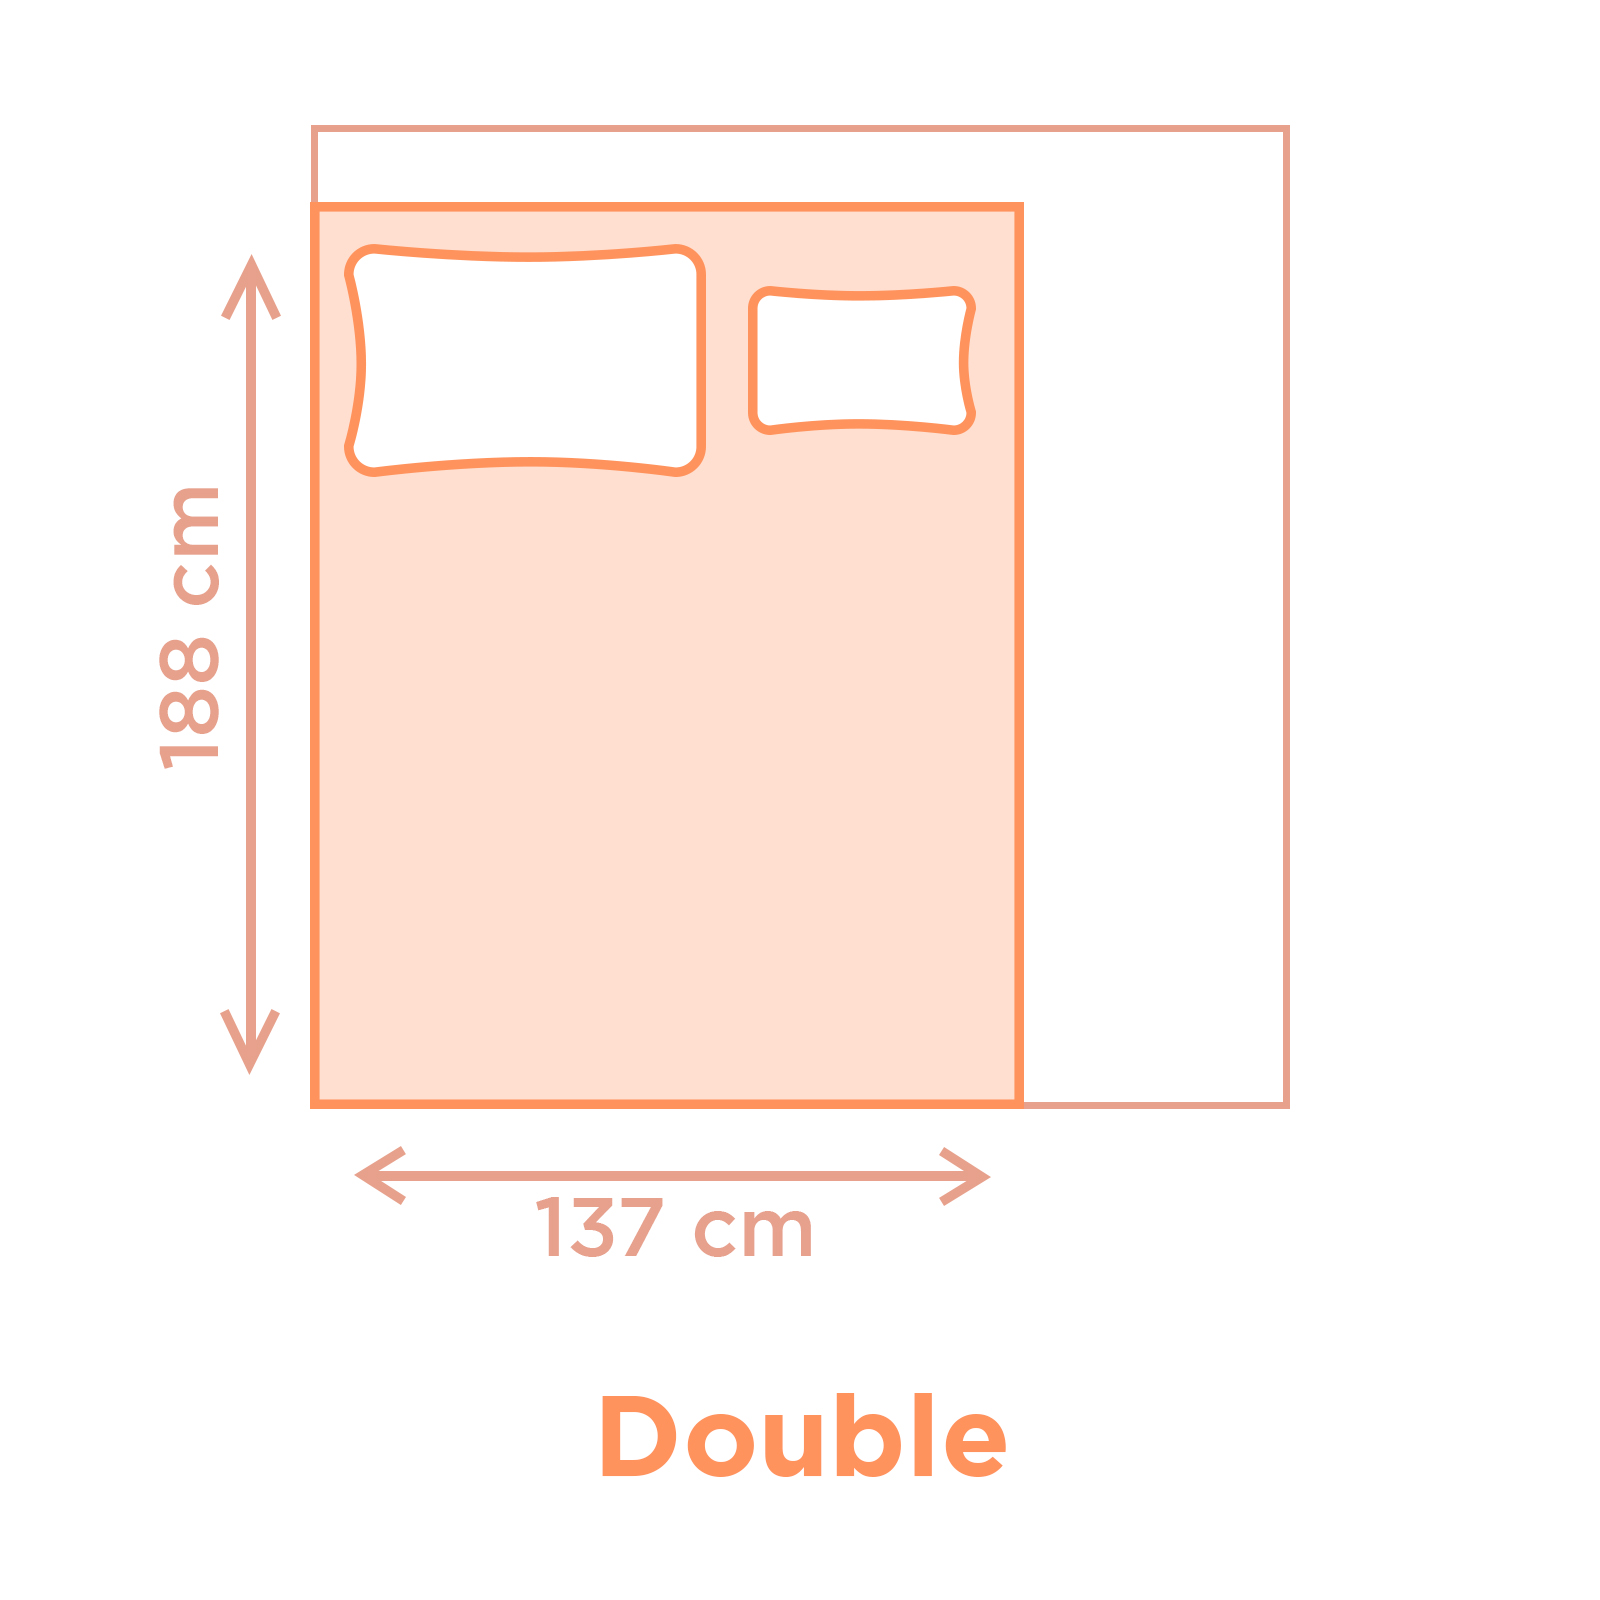 Double Mattress Size & Dimensions in Australia